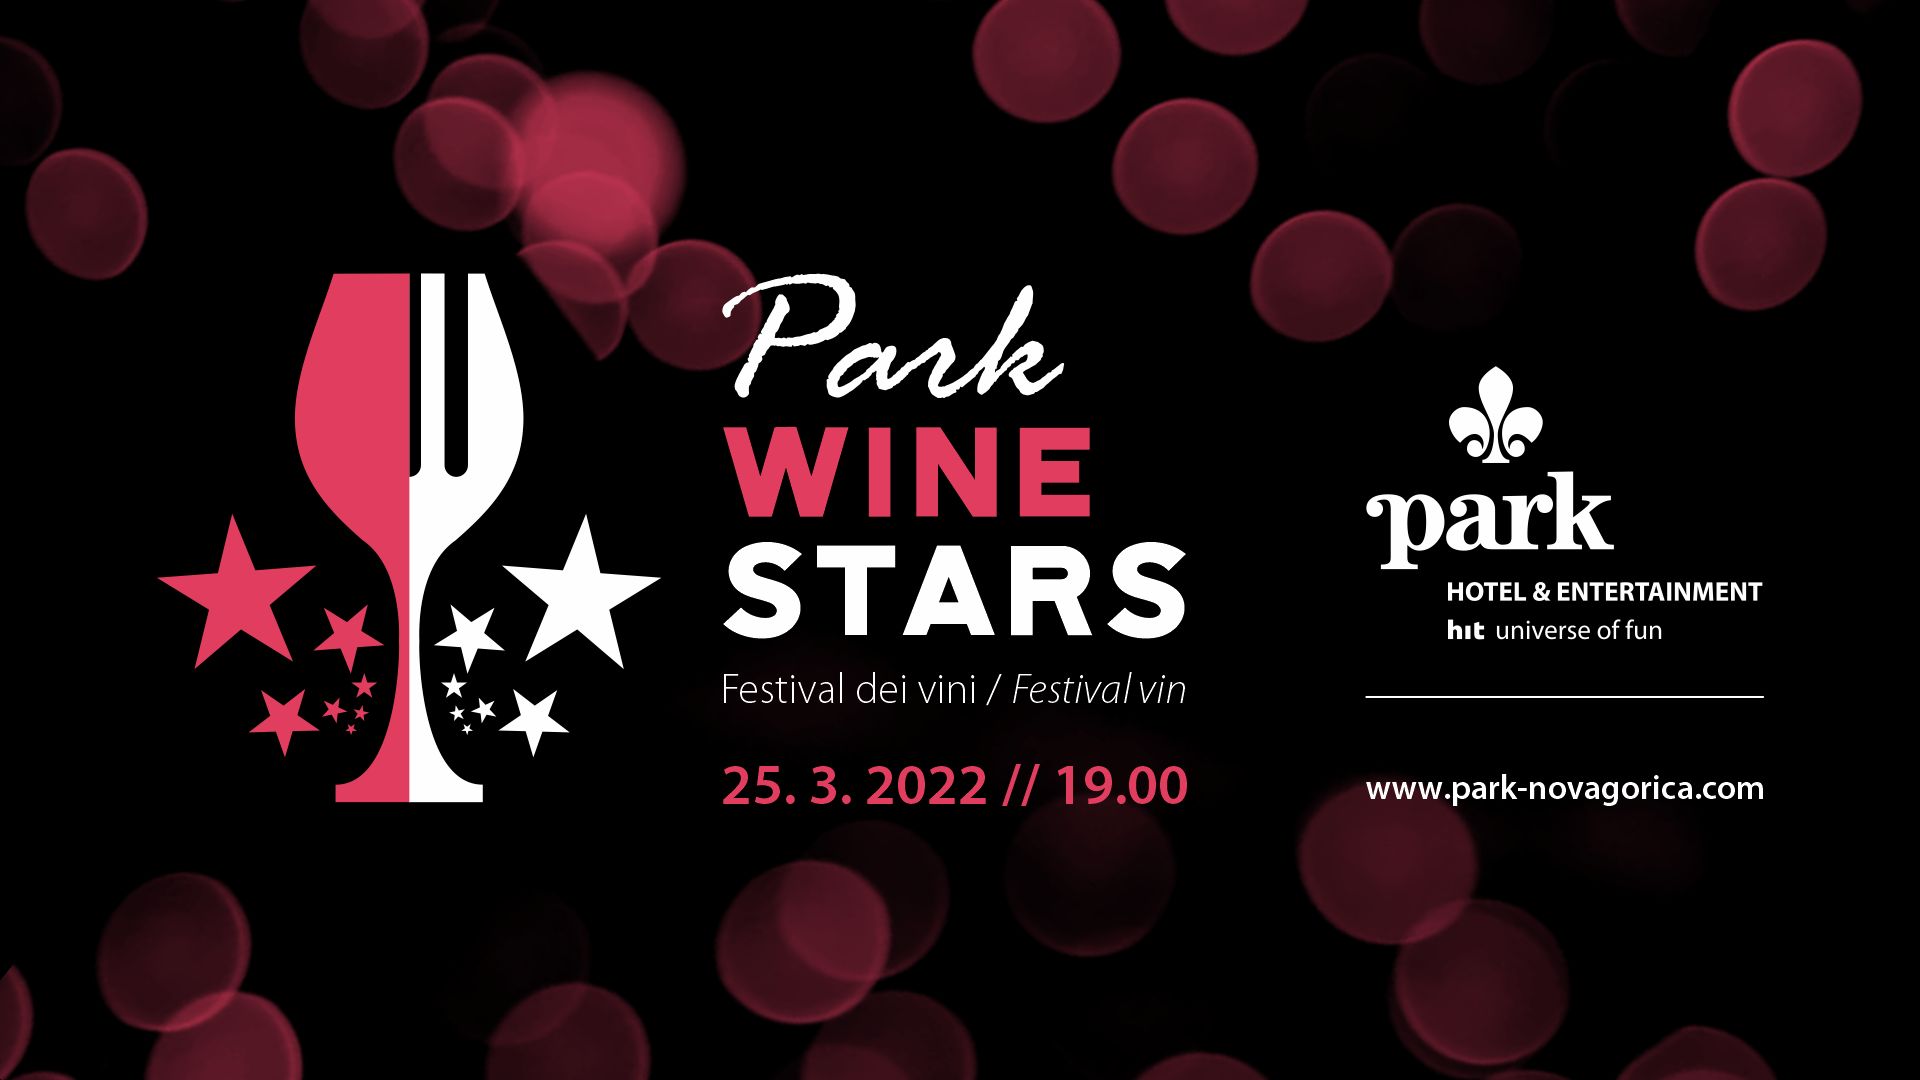 Park Wine Stars Nova Gorica Slovenia